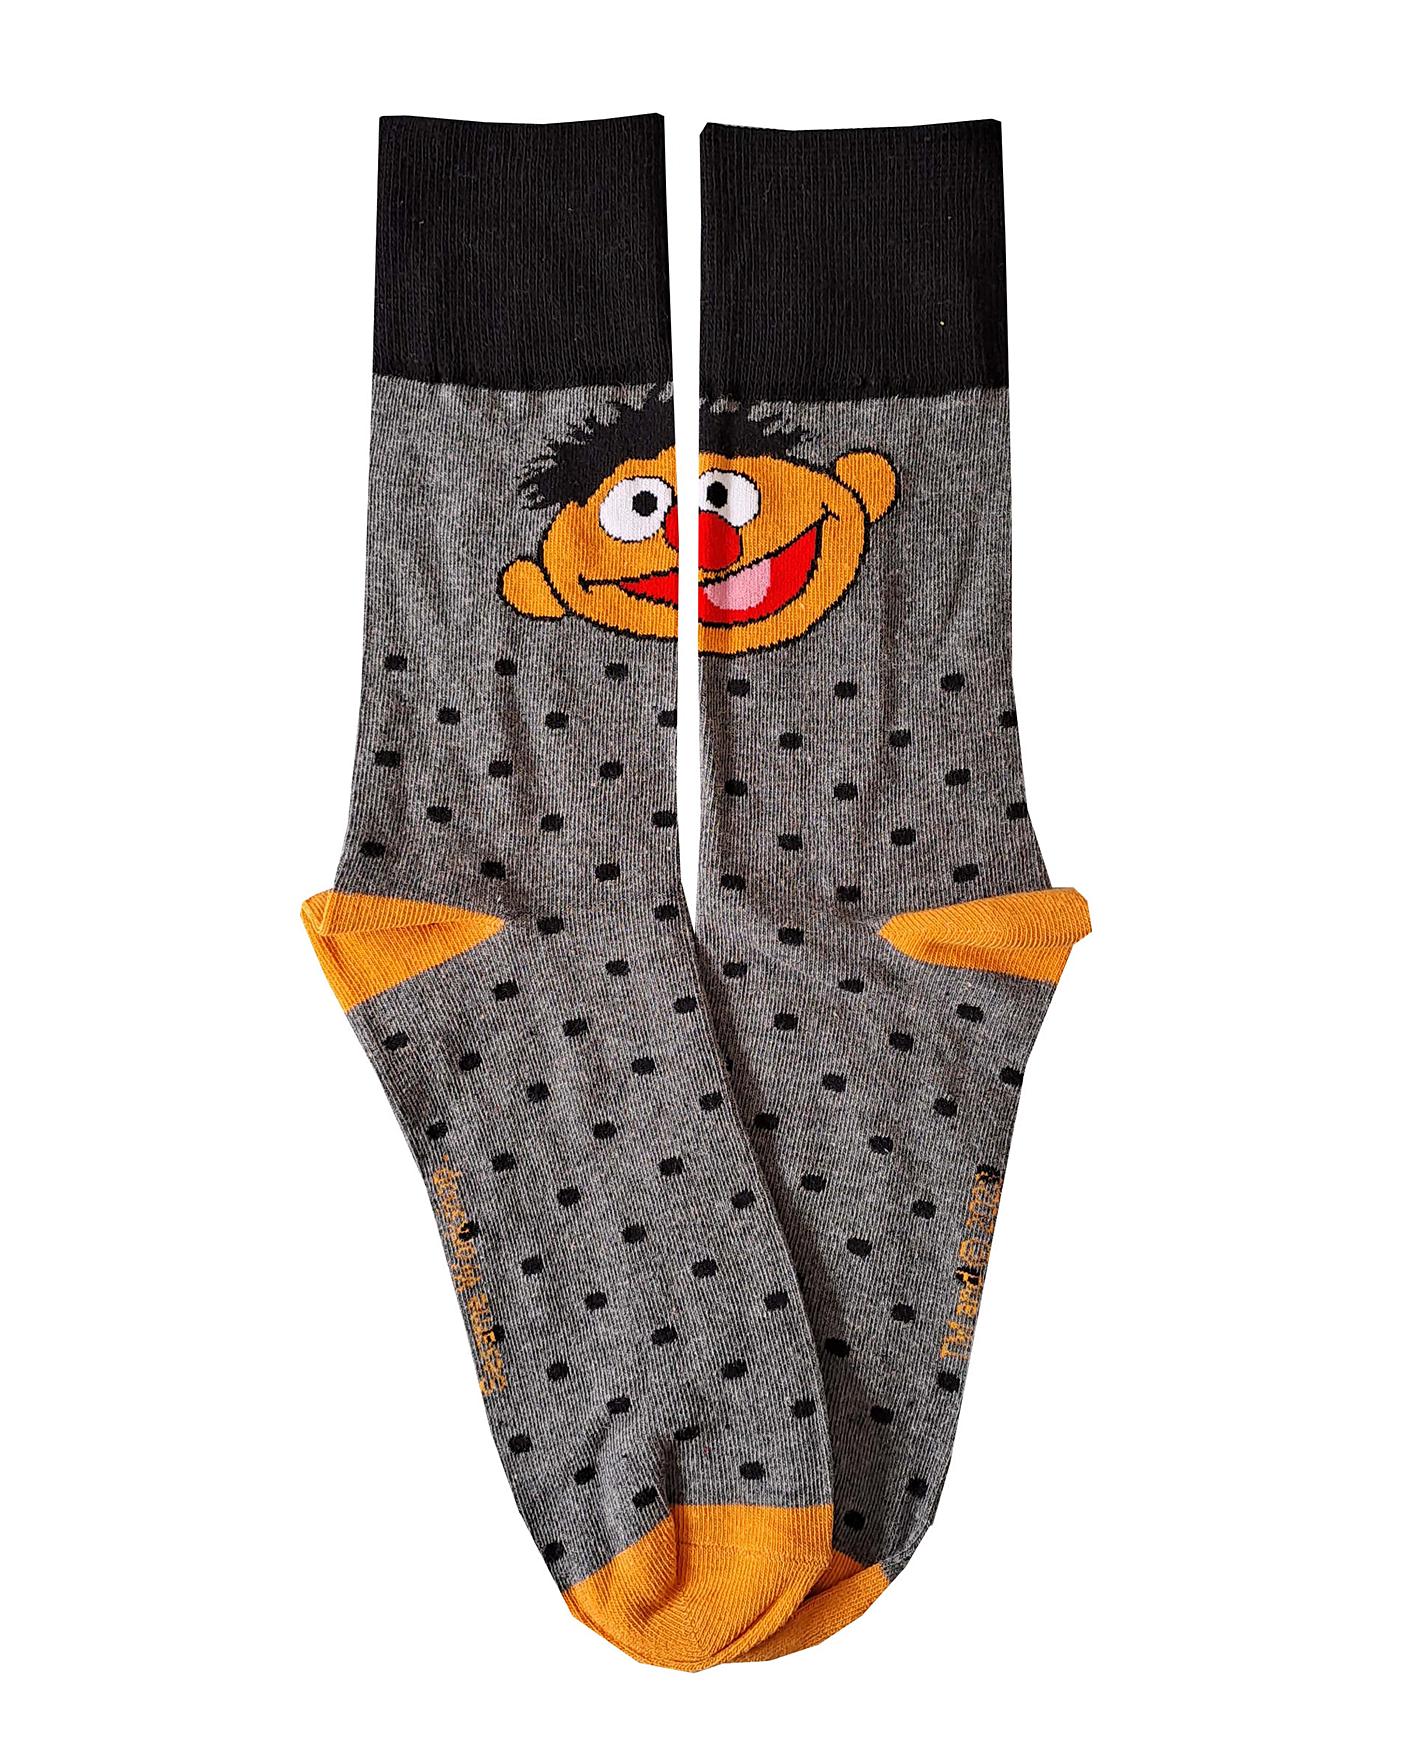 Sesame Street, Underwear & Socks